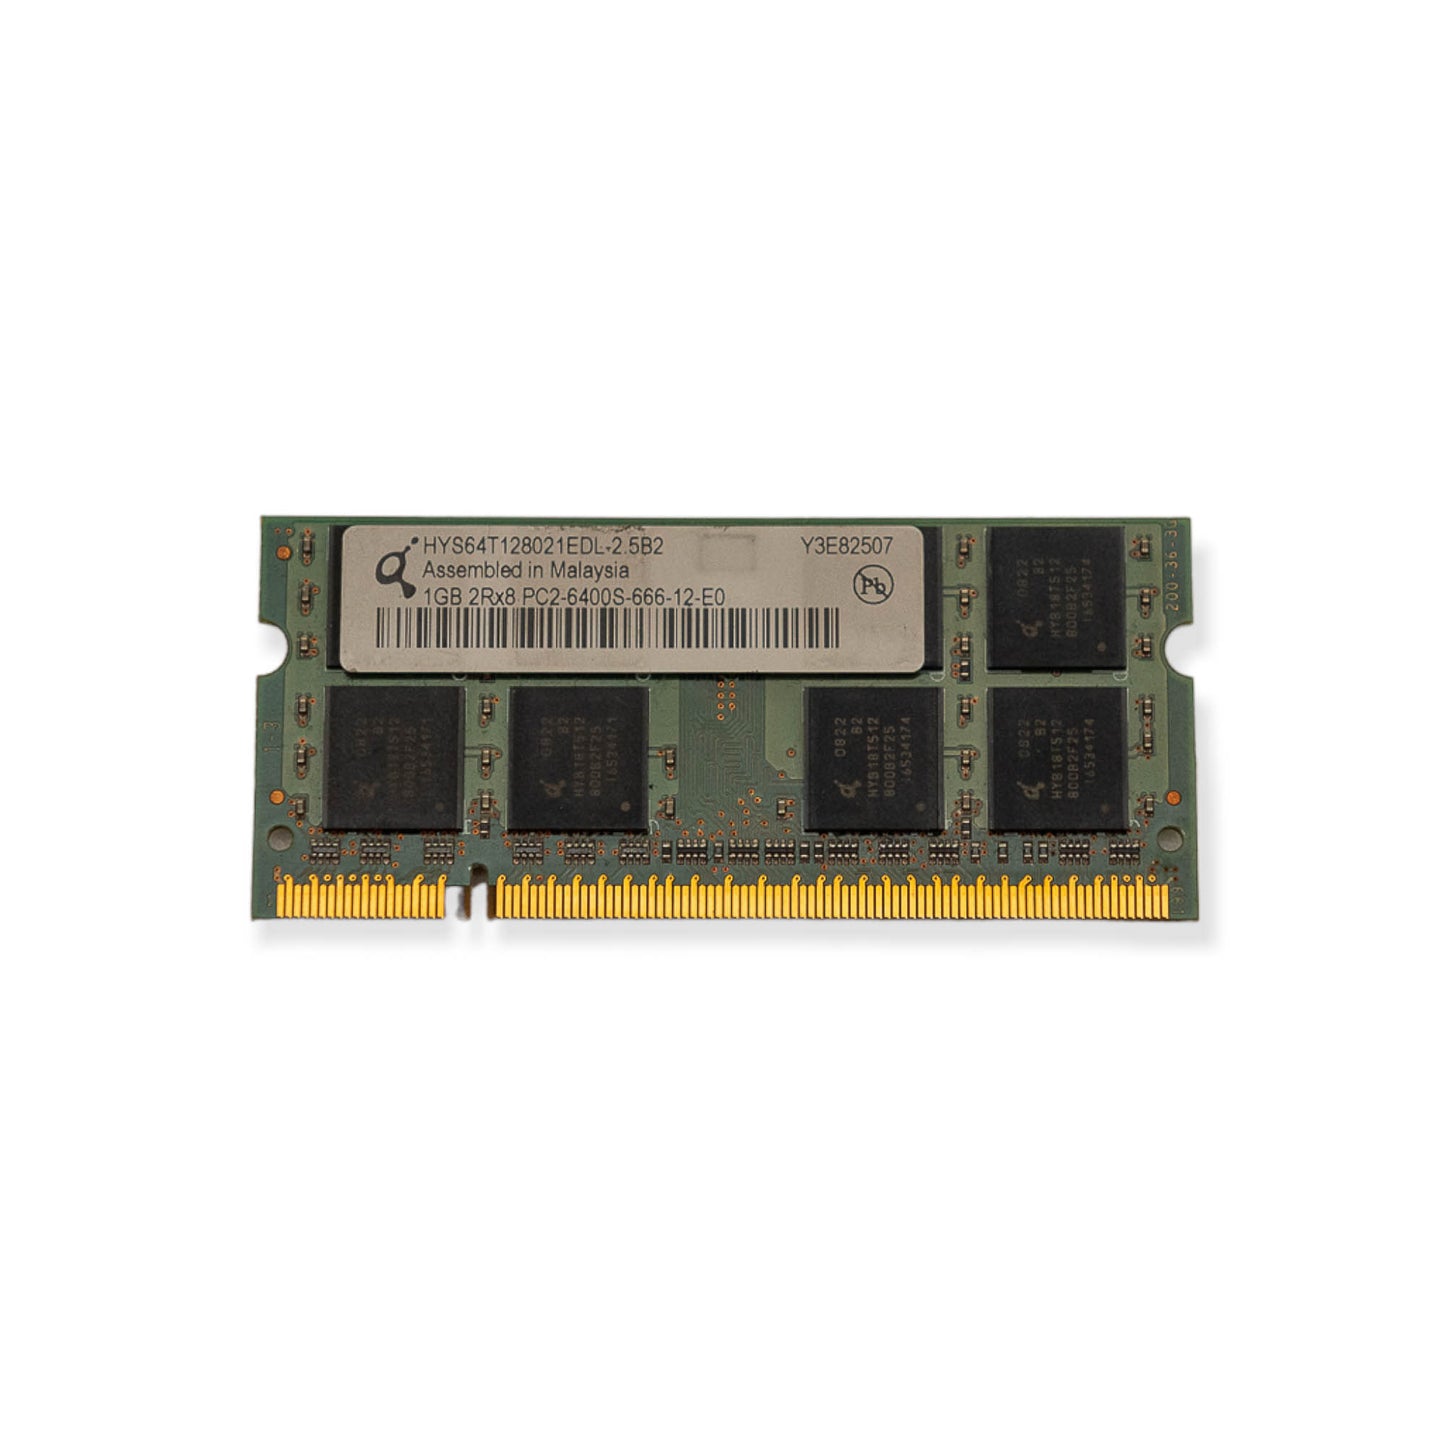 Memória Ram SO-DIMM Hynix DDR2 1GB 6400S HYS64T128021EDL-2.5B2